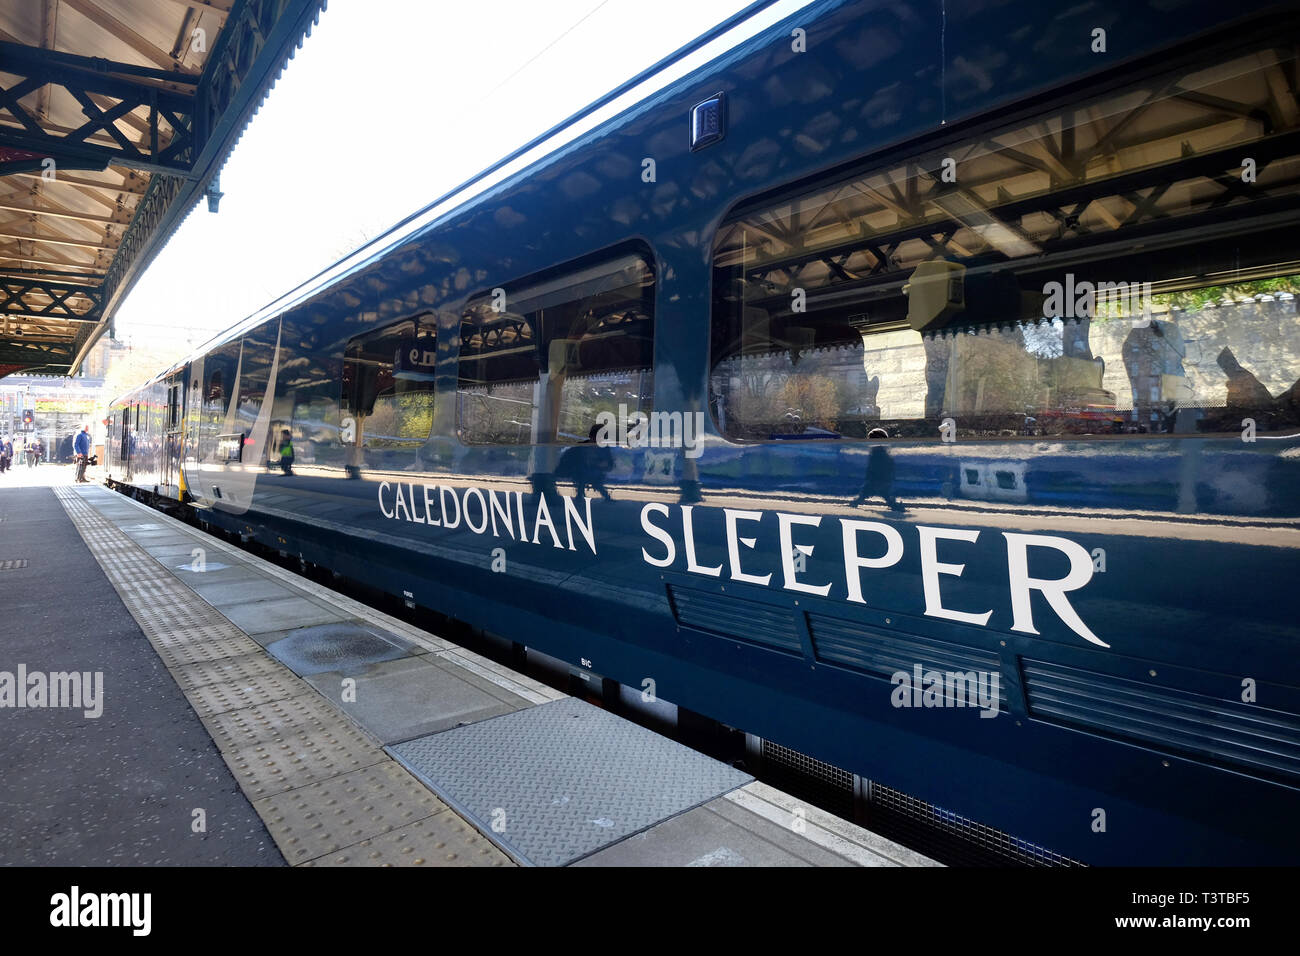 A Caledonian Sleeper train at Edinburgh Waverley Station. Stock Photo